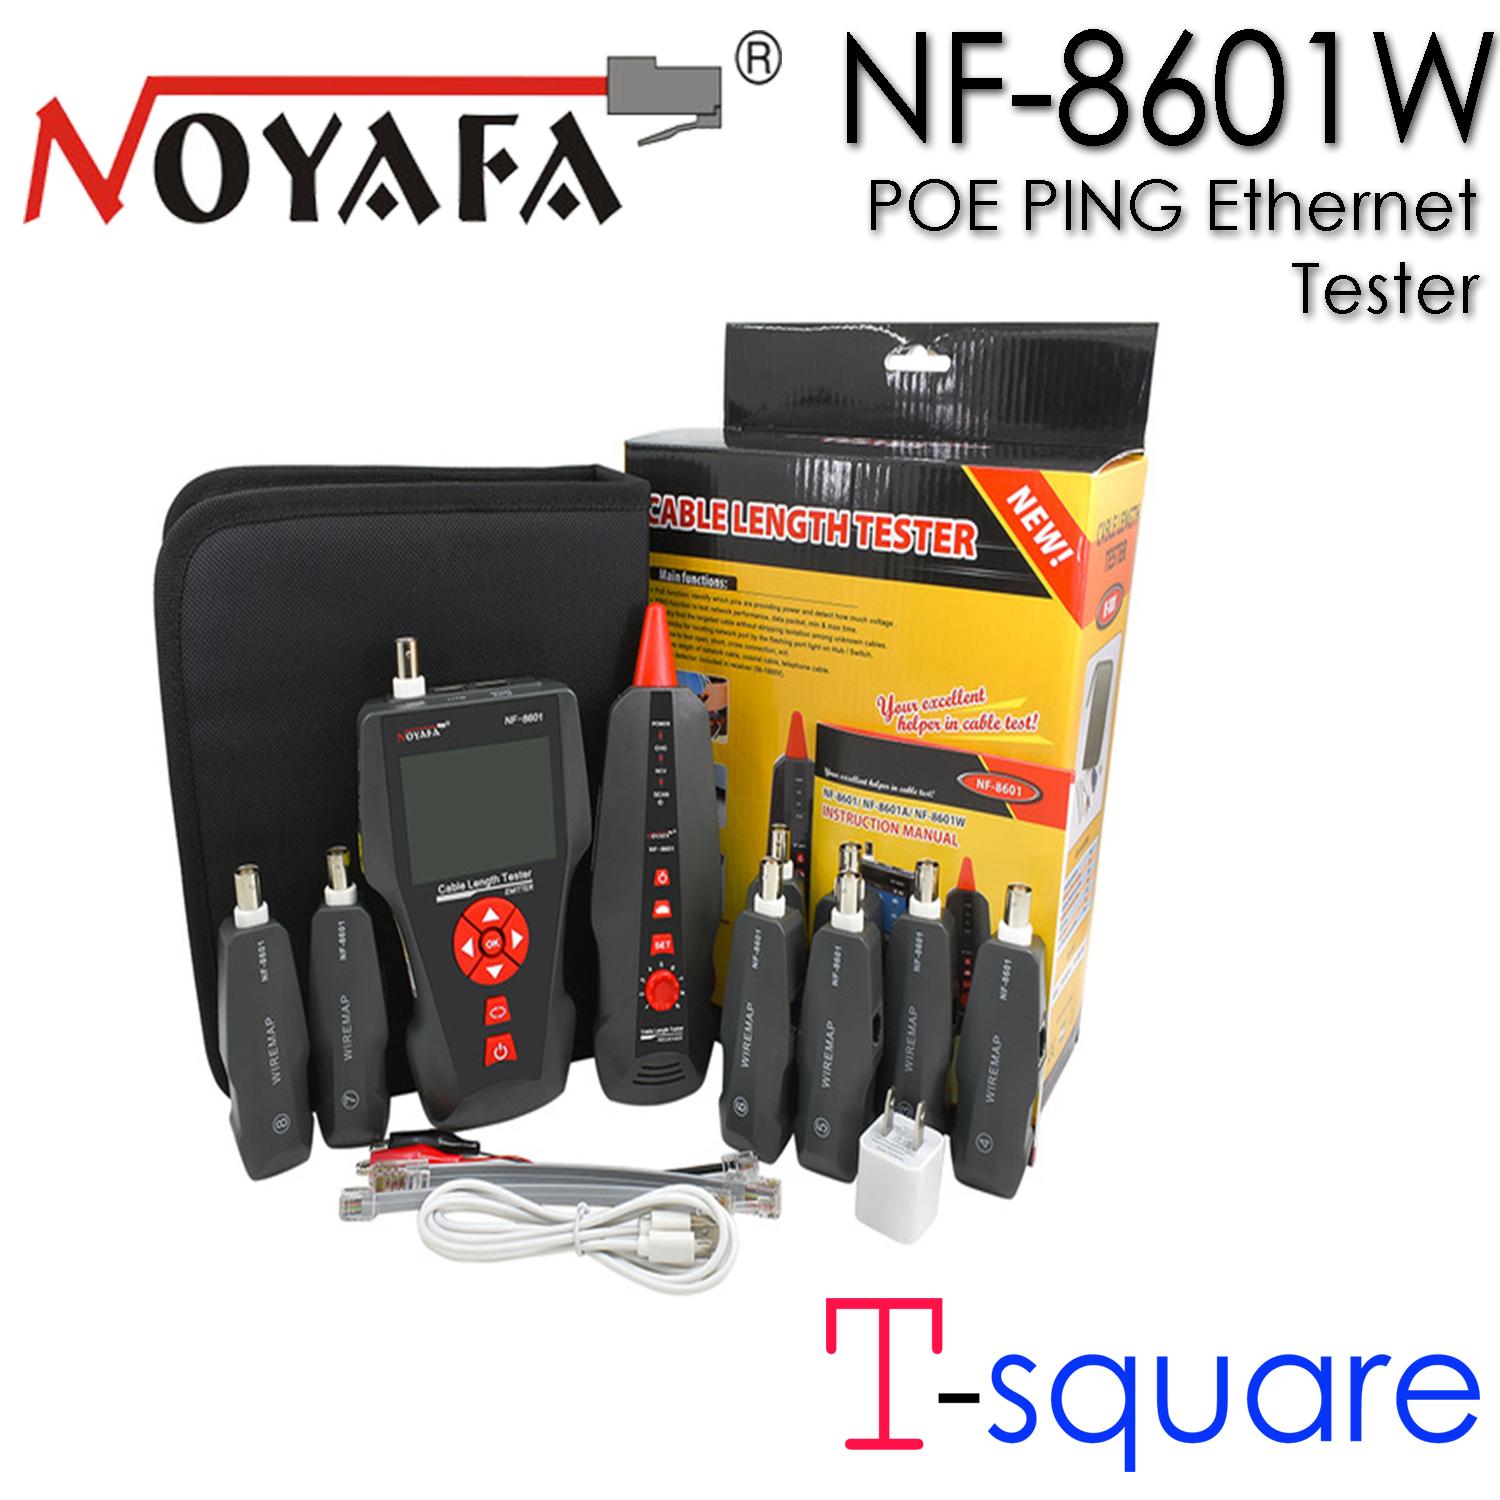 Noyafa NF-8601W POE PING Ethernet Tester/tsquare